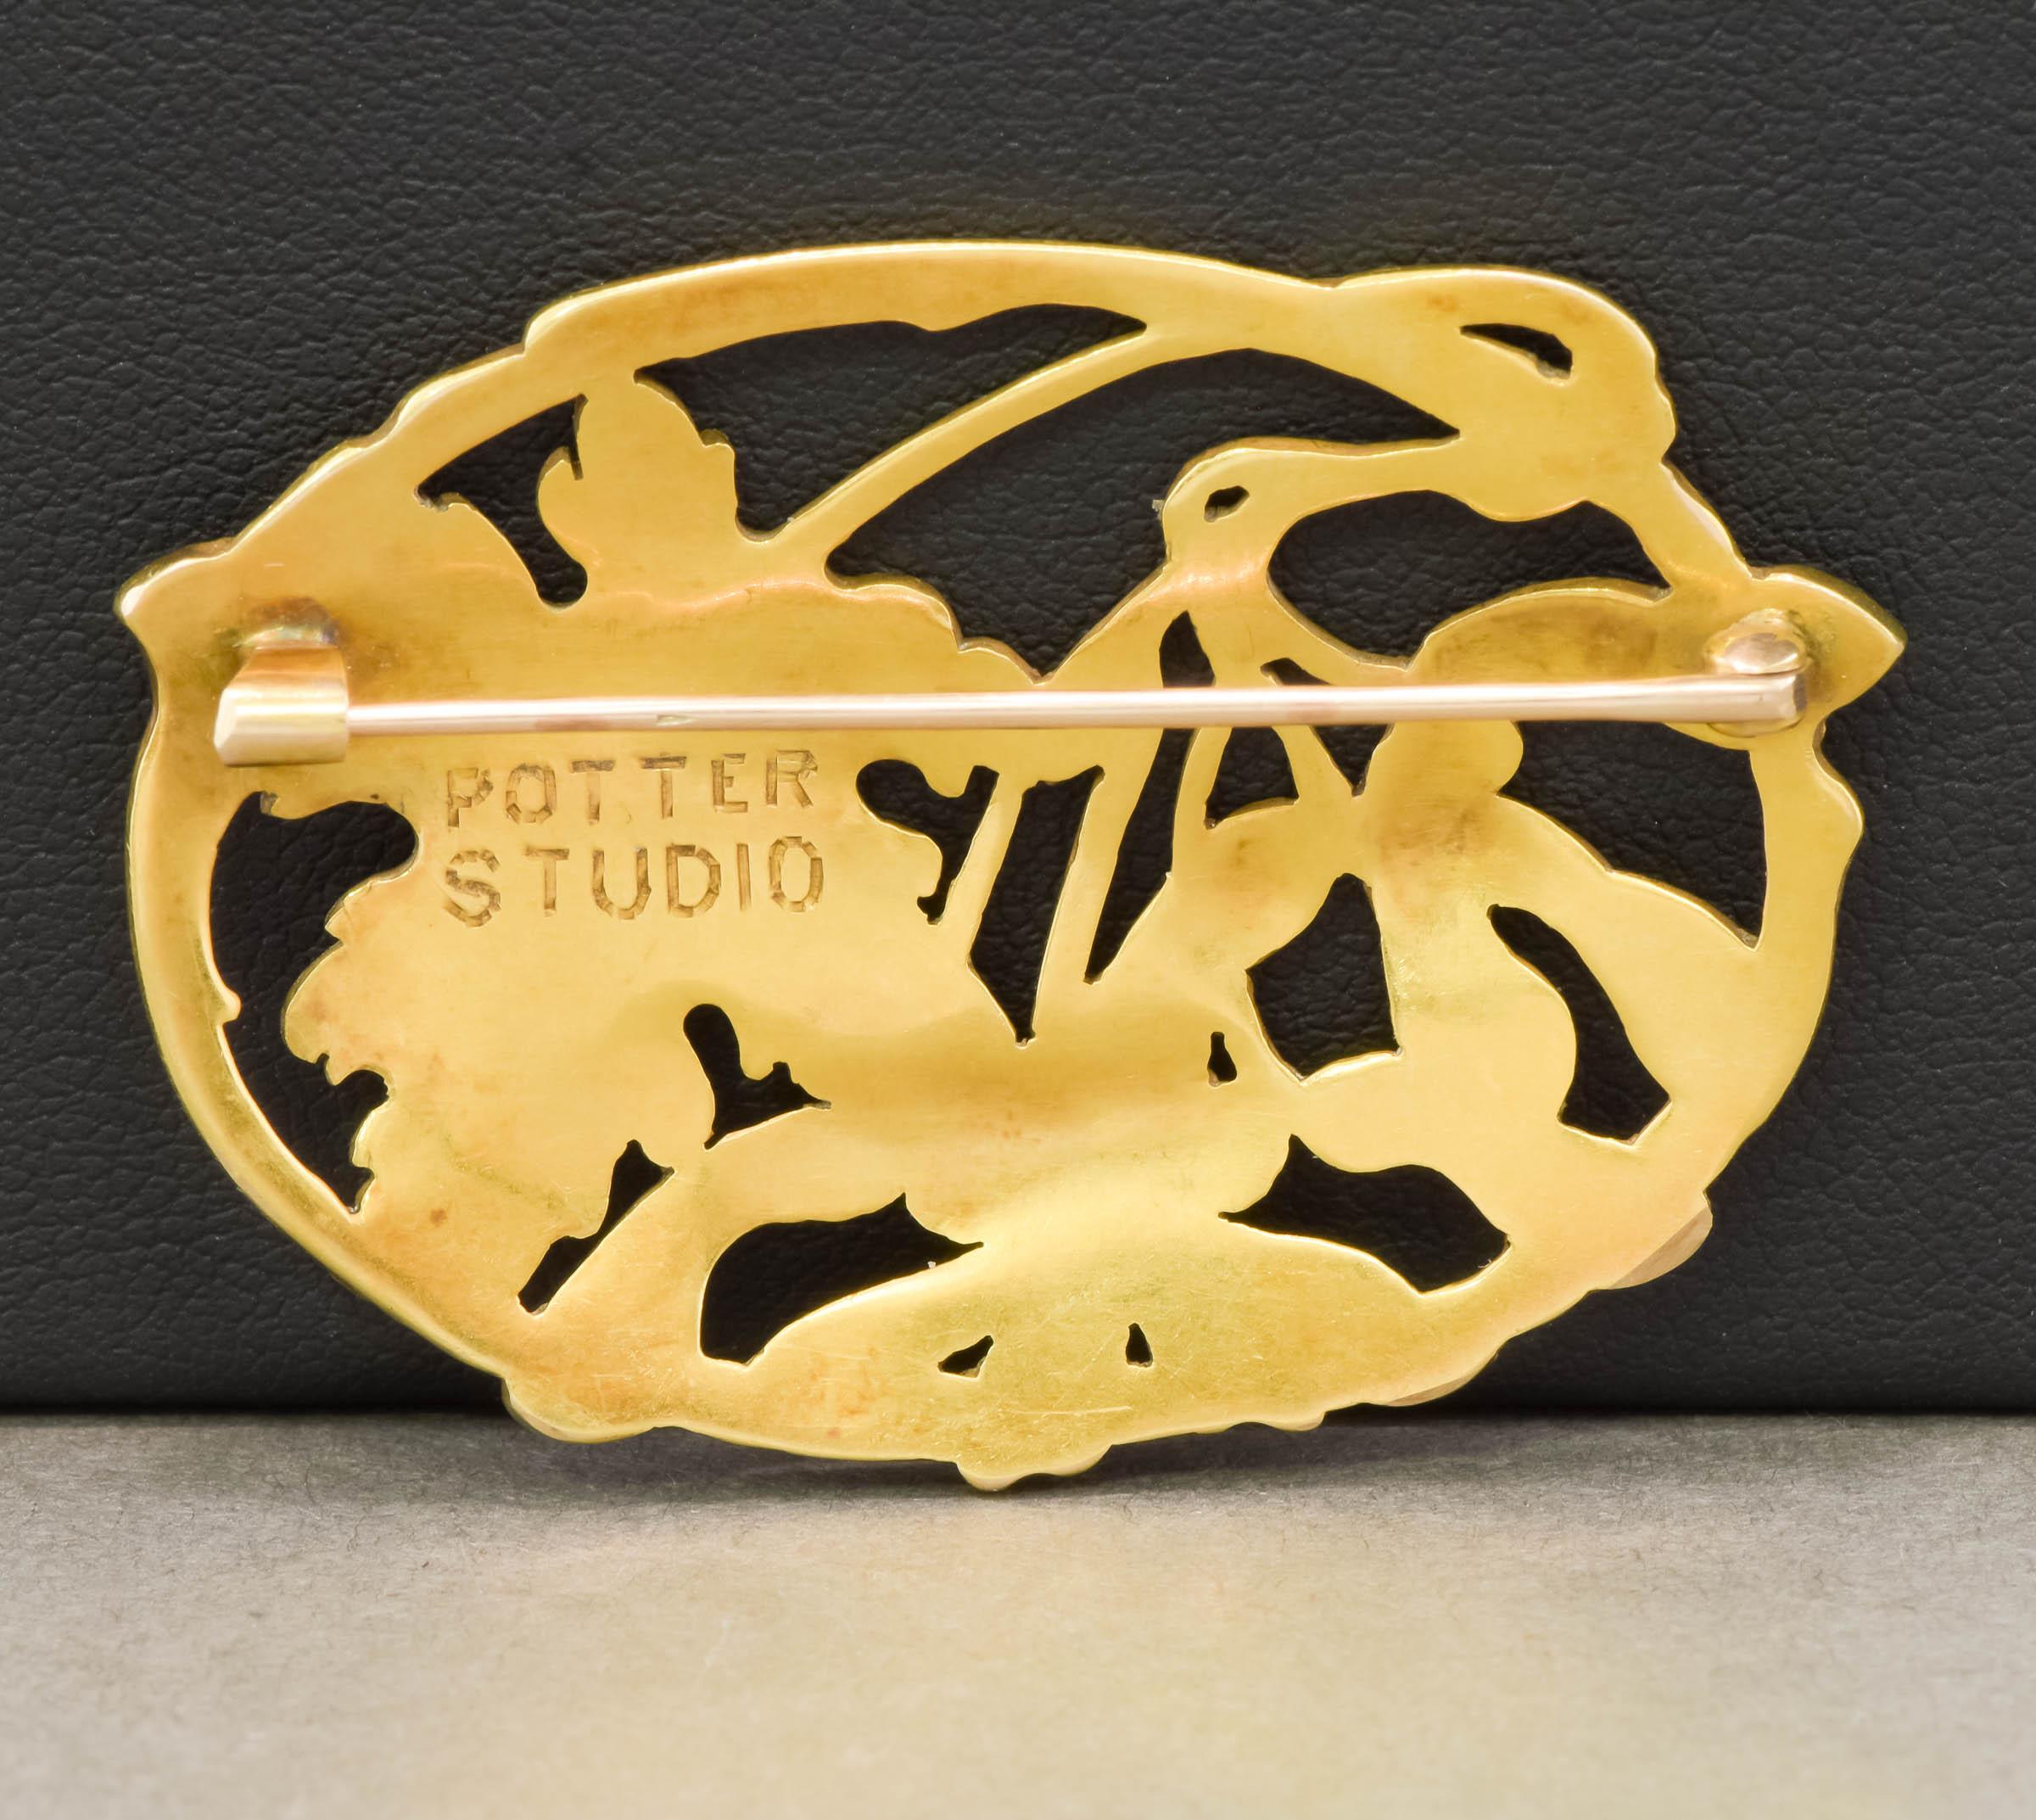 Arts and Crafts Antique Arts & Crafts 18K Gold Brooch by Potter Studio - Large Foliate Design